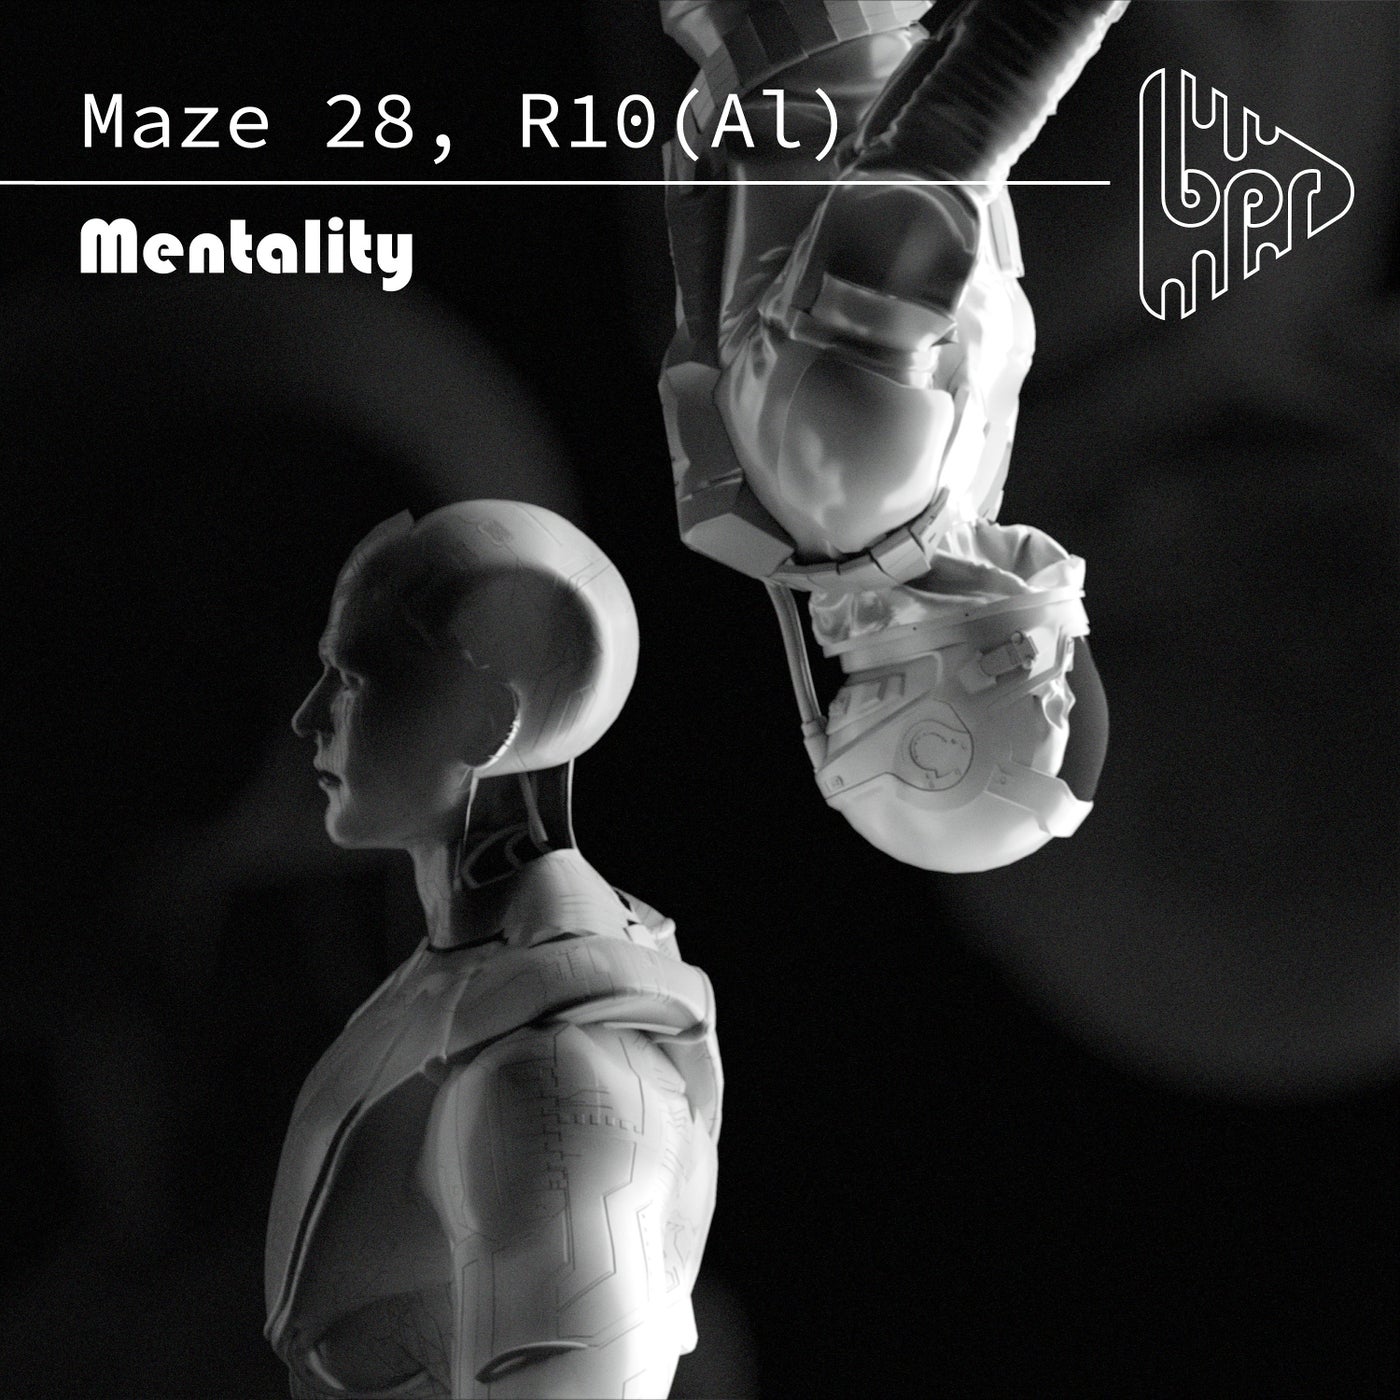 Maze 28, R10(Al) – Mentality [BPR063]